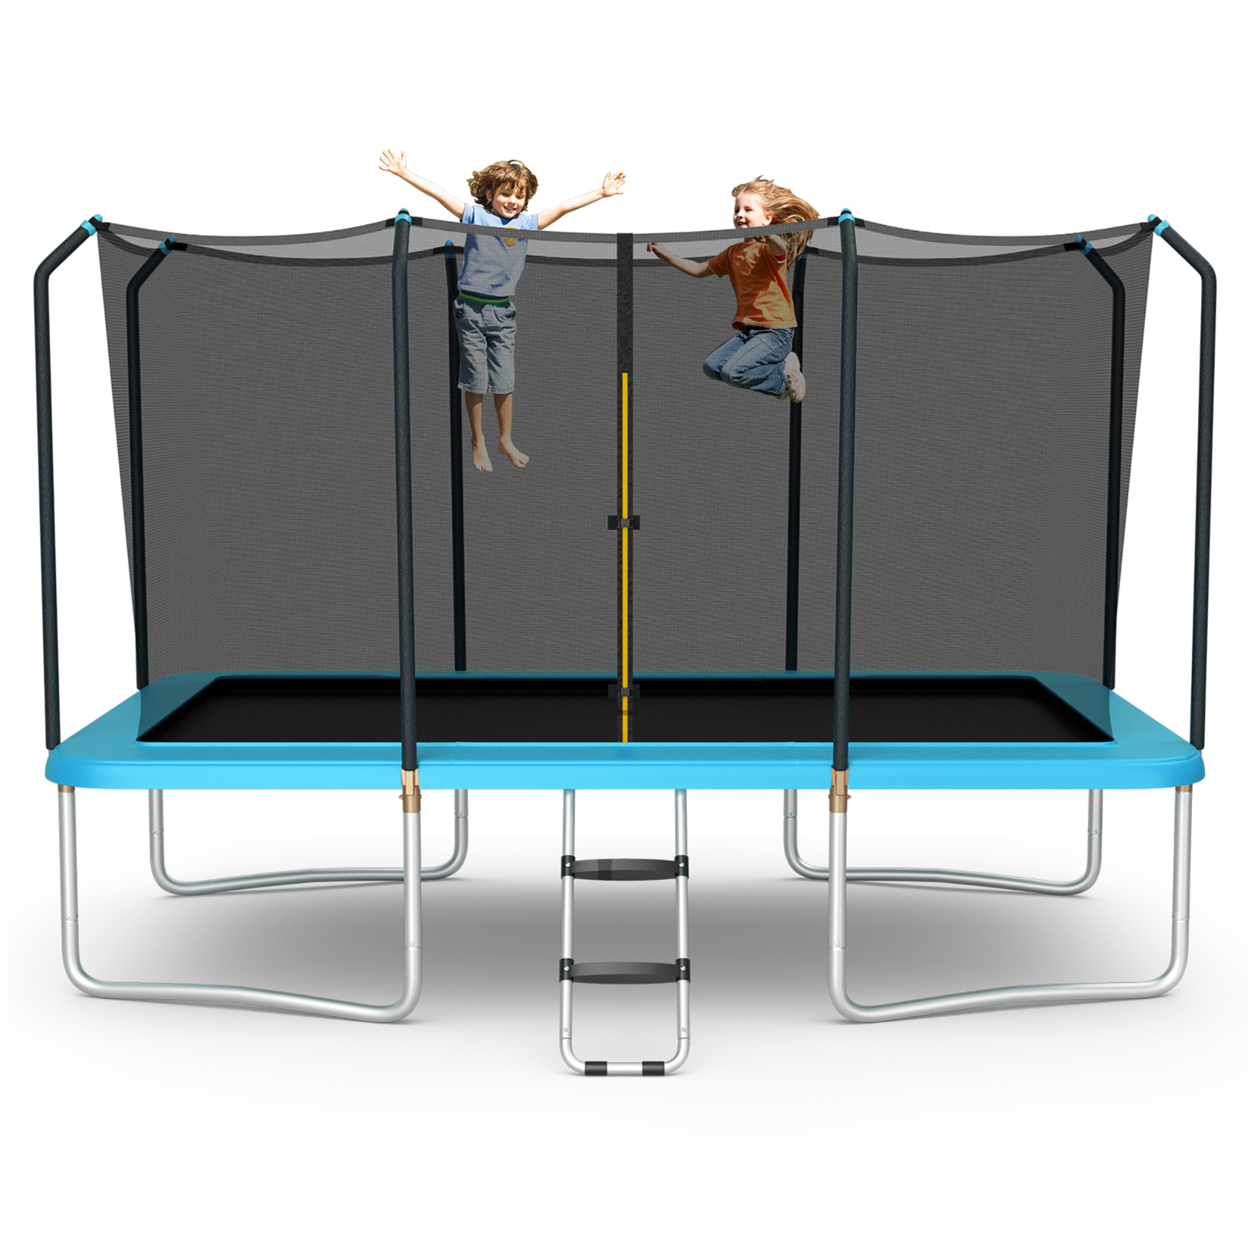 8 X 14 FT Rectangular Recreational Trampoline W/ Safety Enclosure Net Ladder Outdoor - Blue